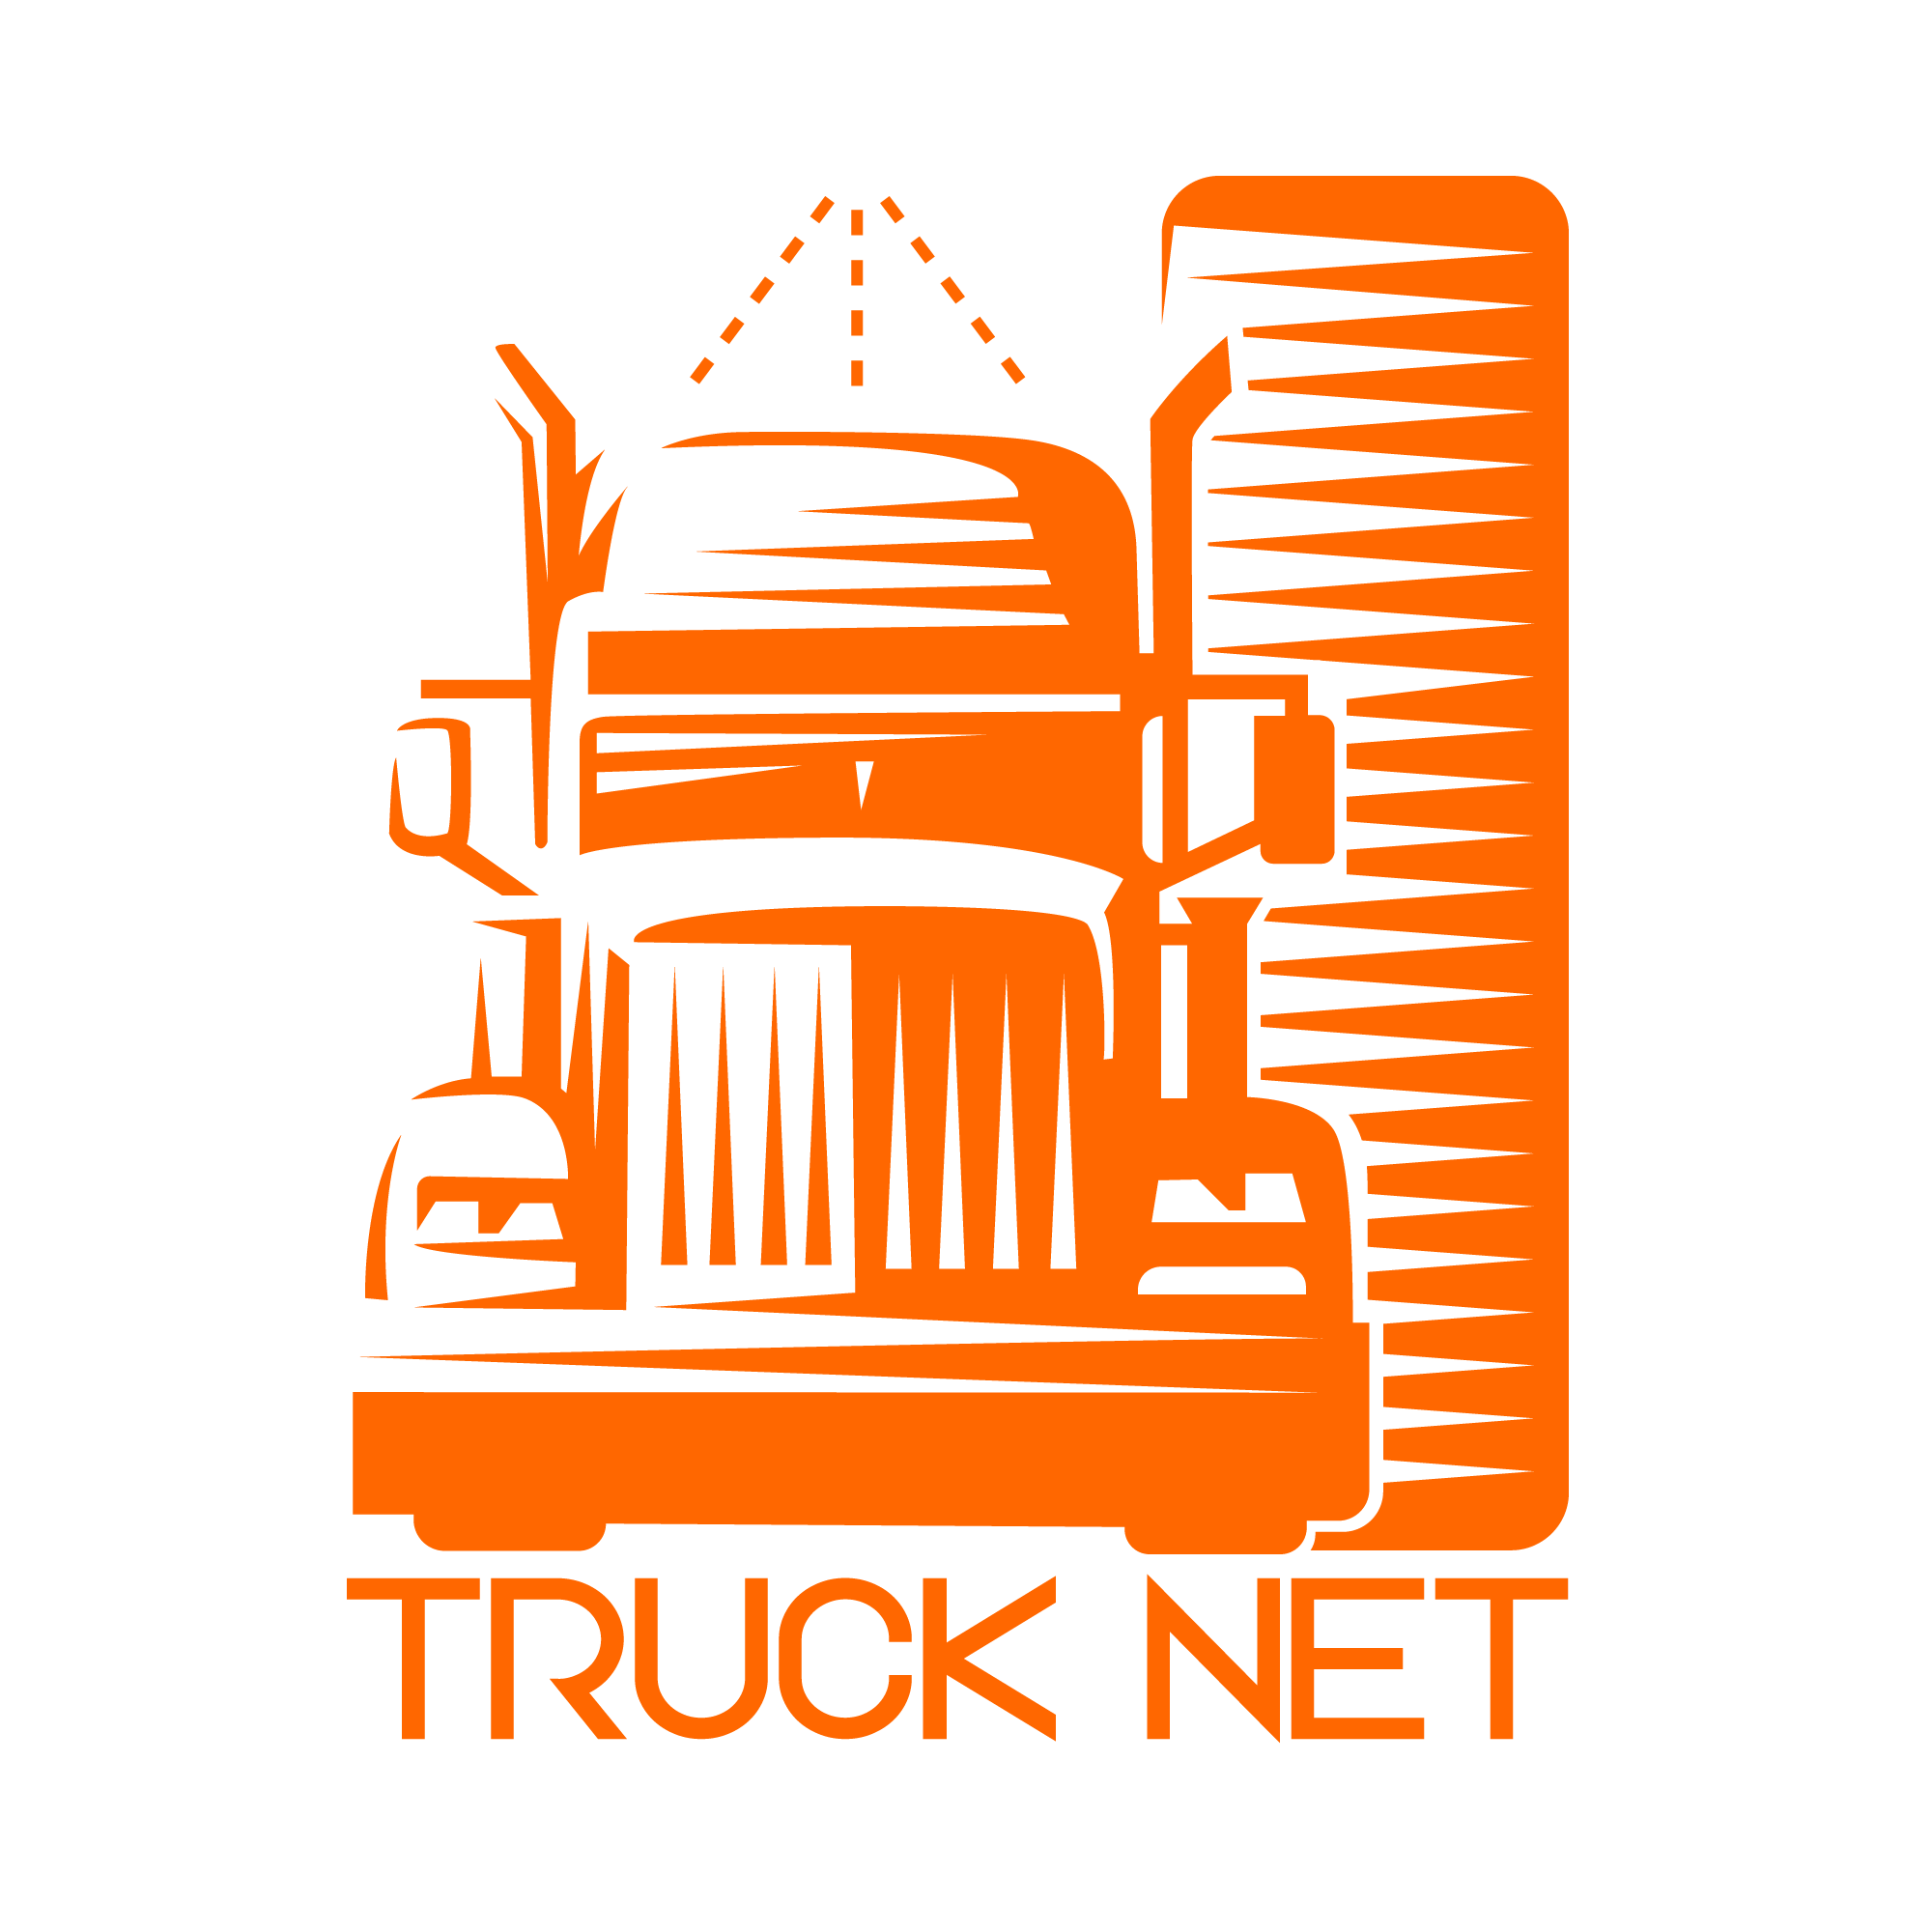 Truck Net Logo